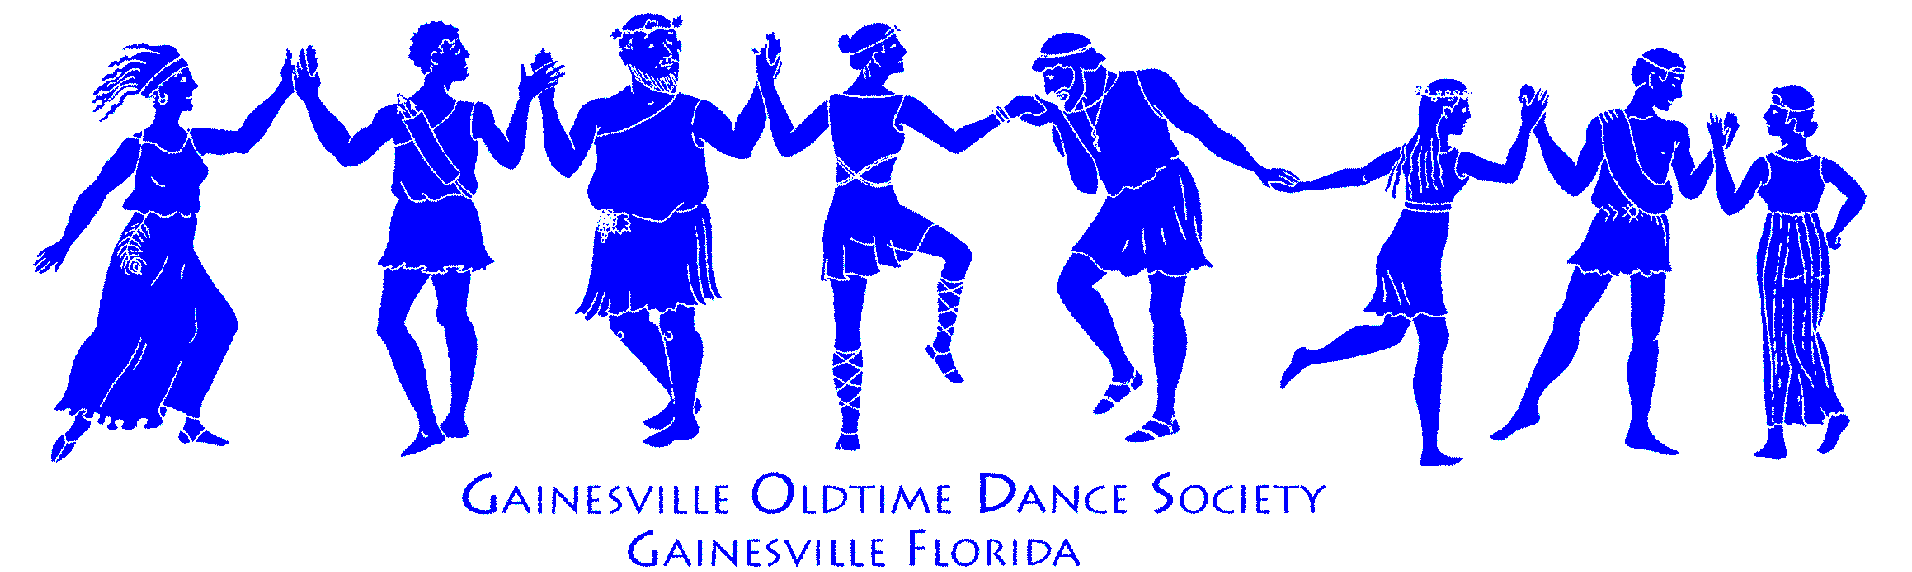 Gainesville Oldtime Dance Society logo - blue